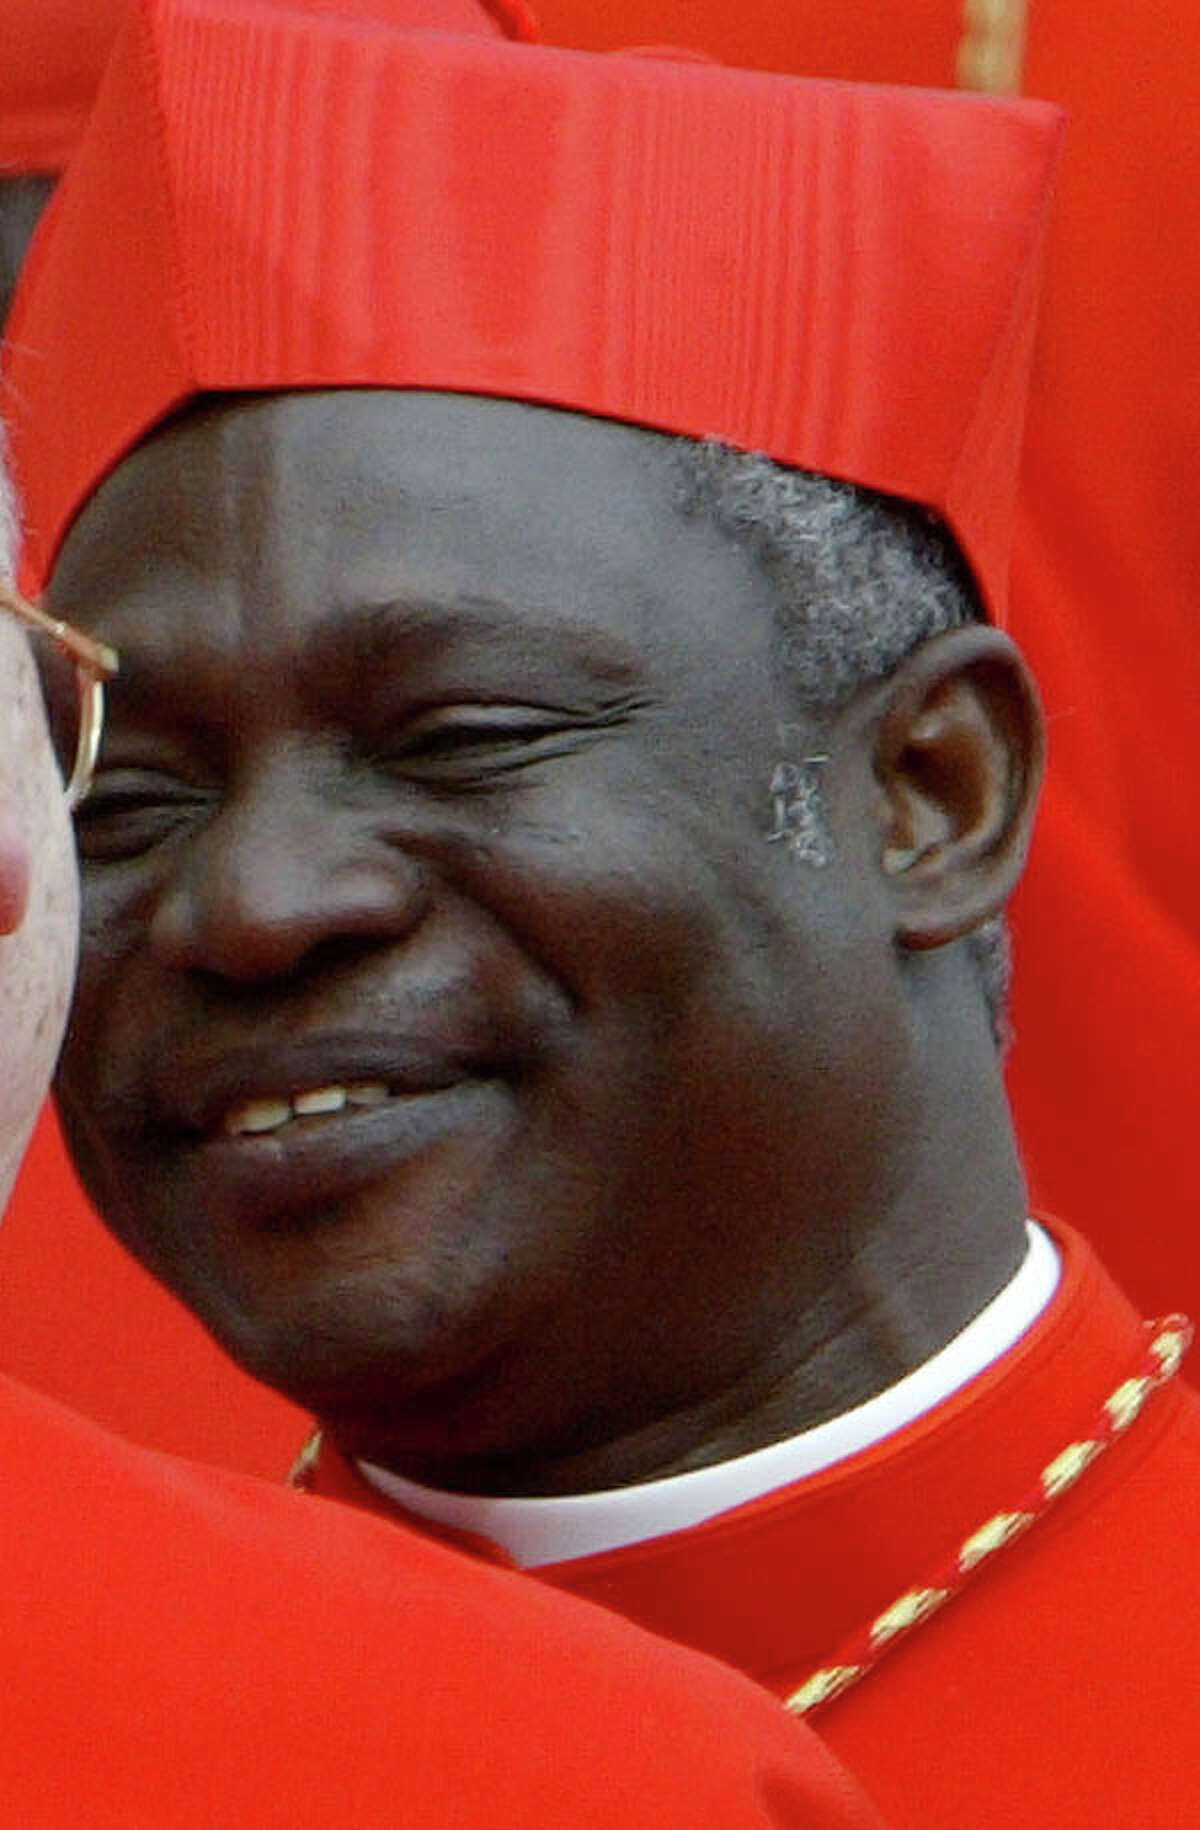 Odds 3-1 Nigerian Cardinal Peter Turkson AFP PHOTODESK/AFP/Getty Images